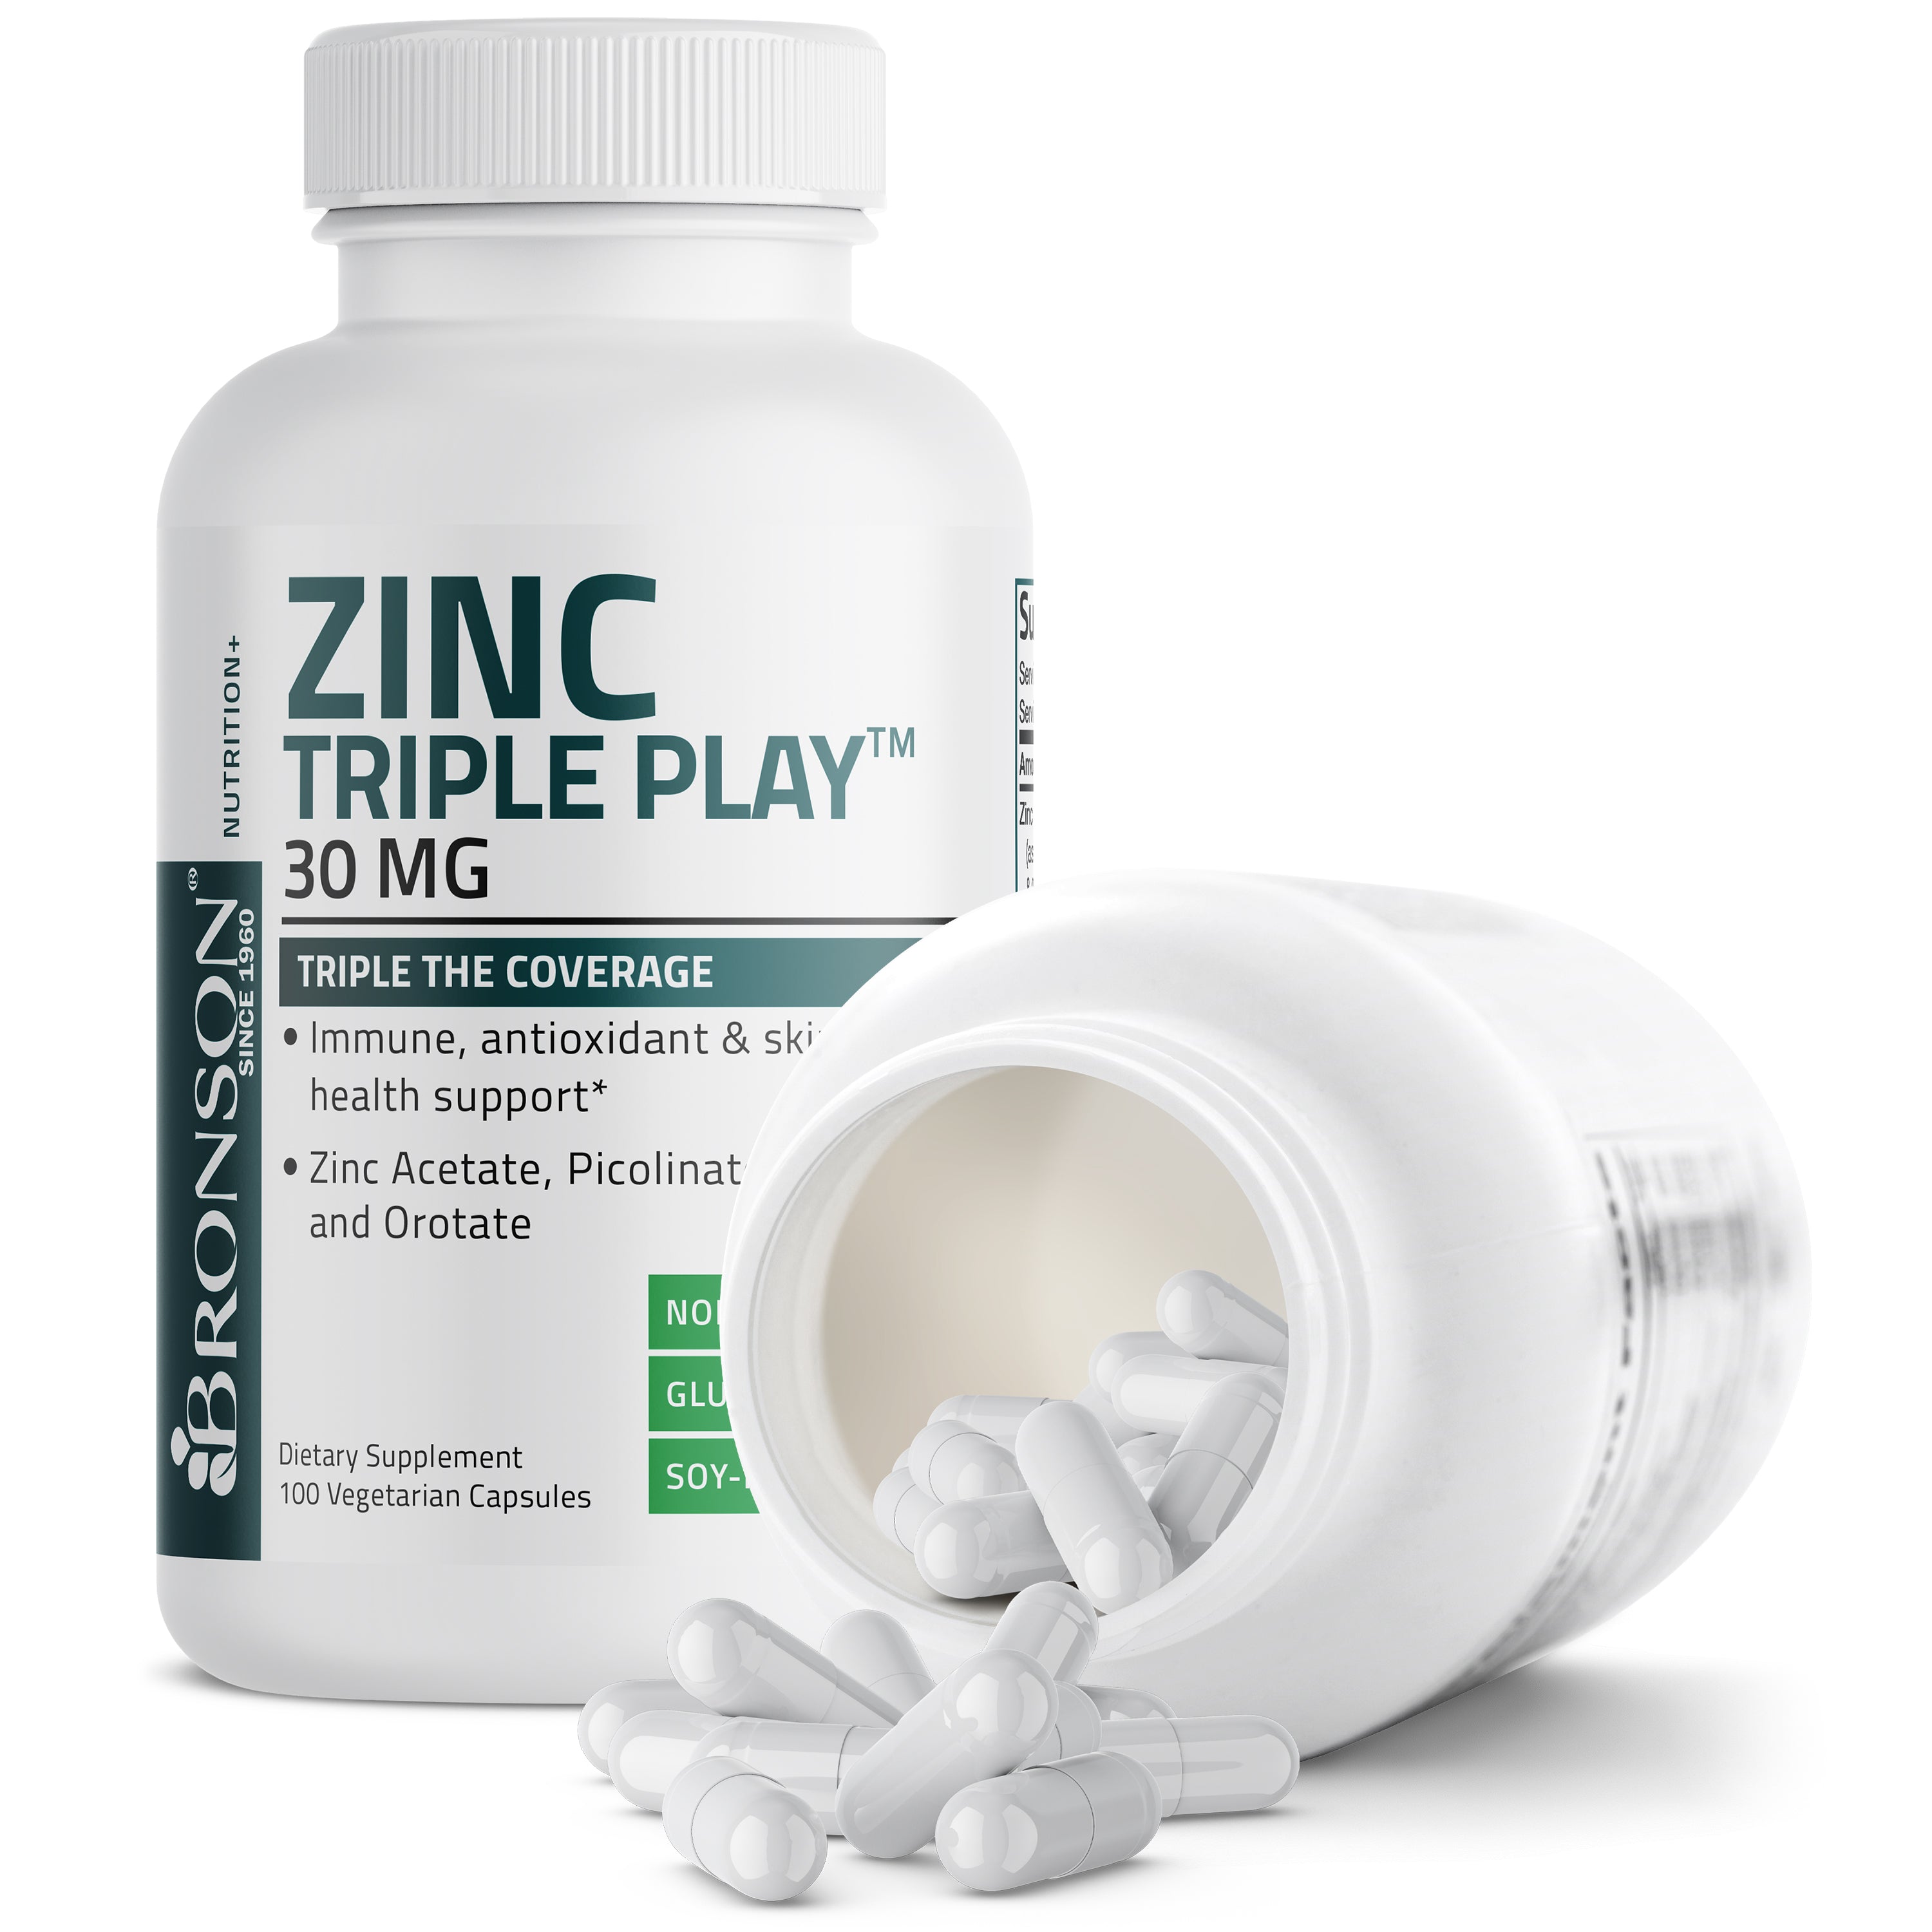 Zinc Triple Play - 30 mg view 12 of 7